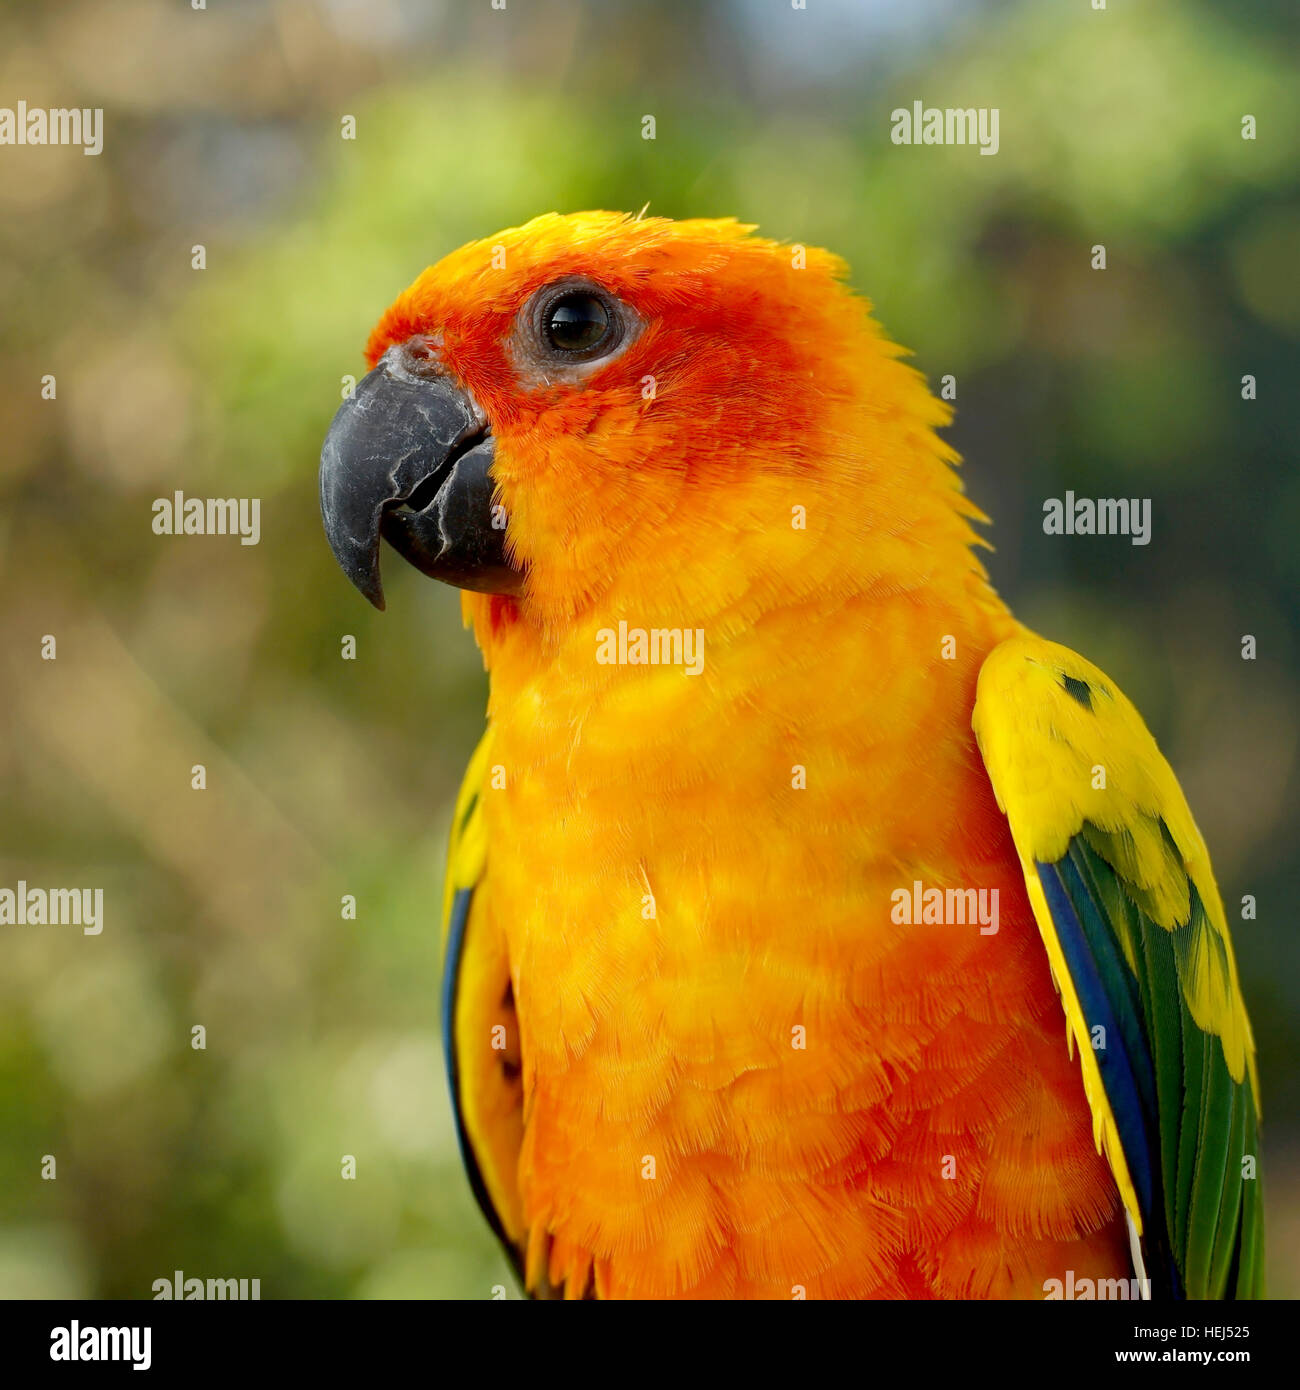 sun conure, beautiful yellow parrot bird sitting on the branch Stock Photo